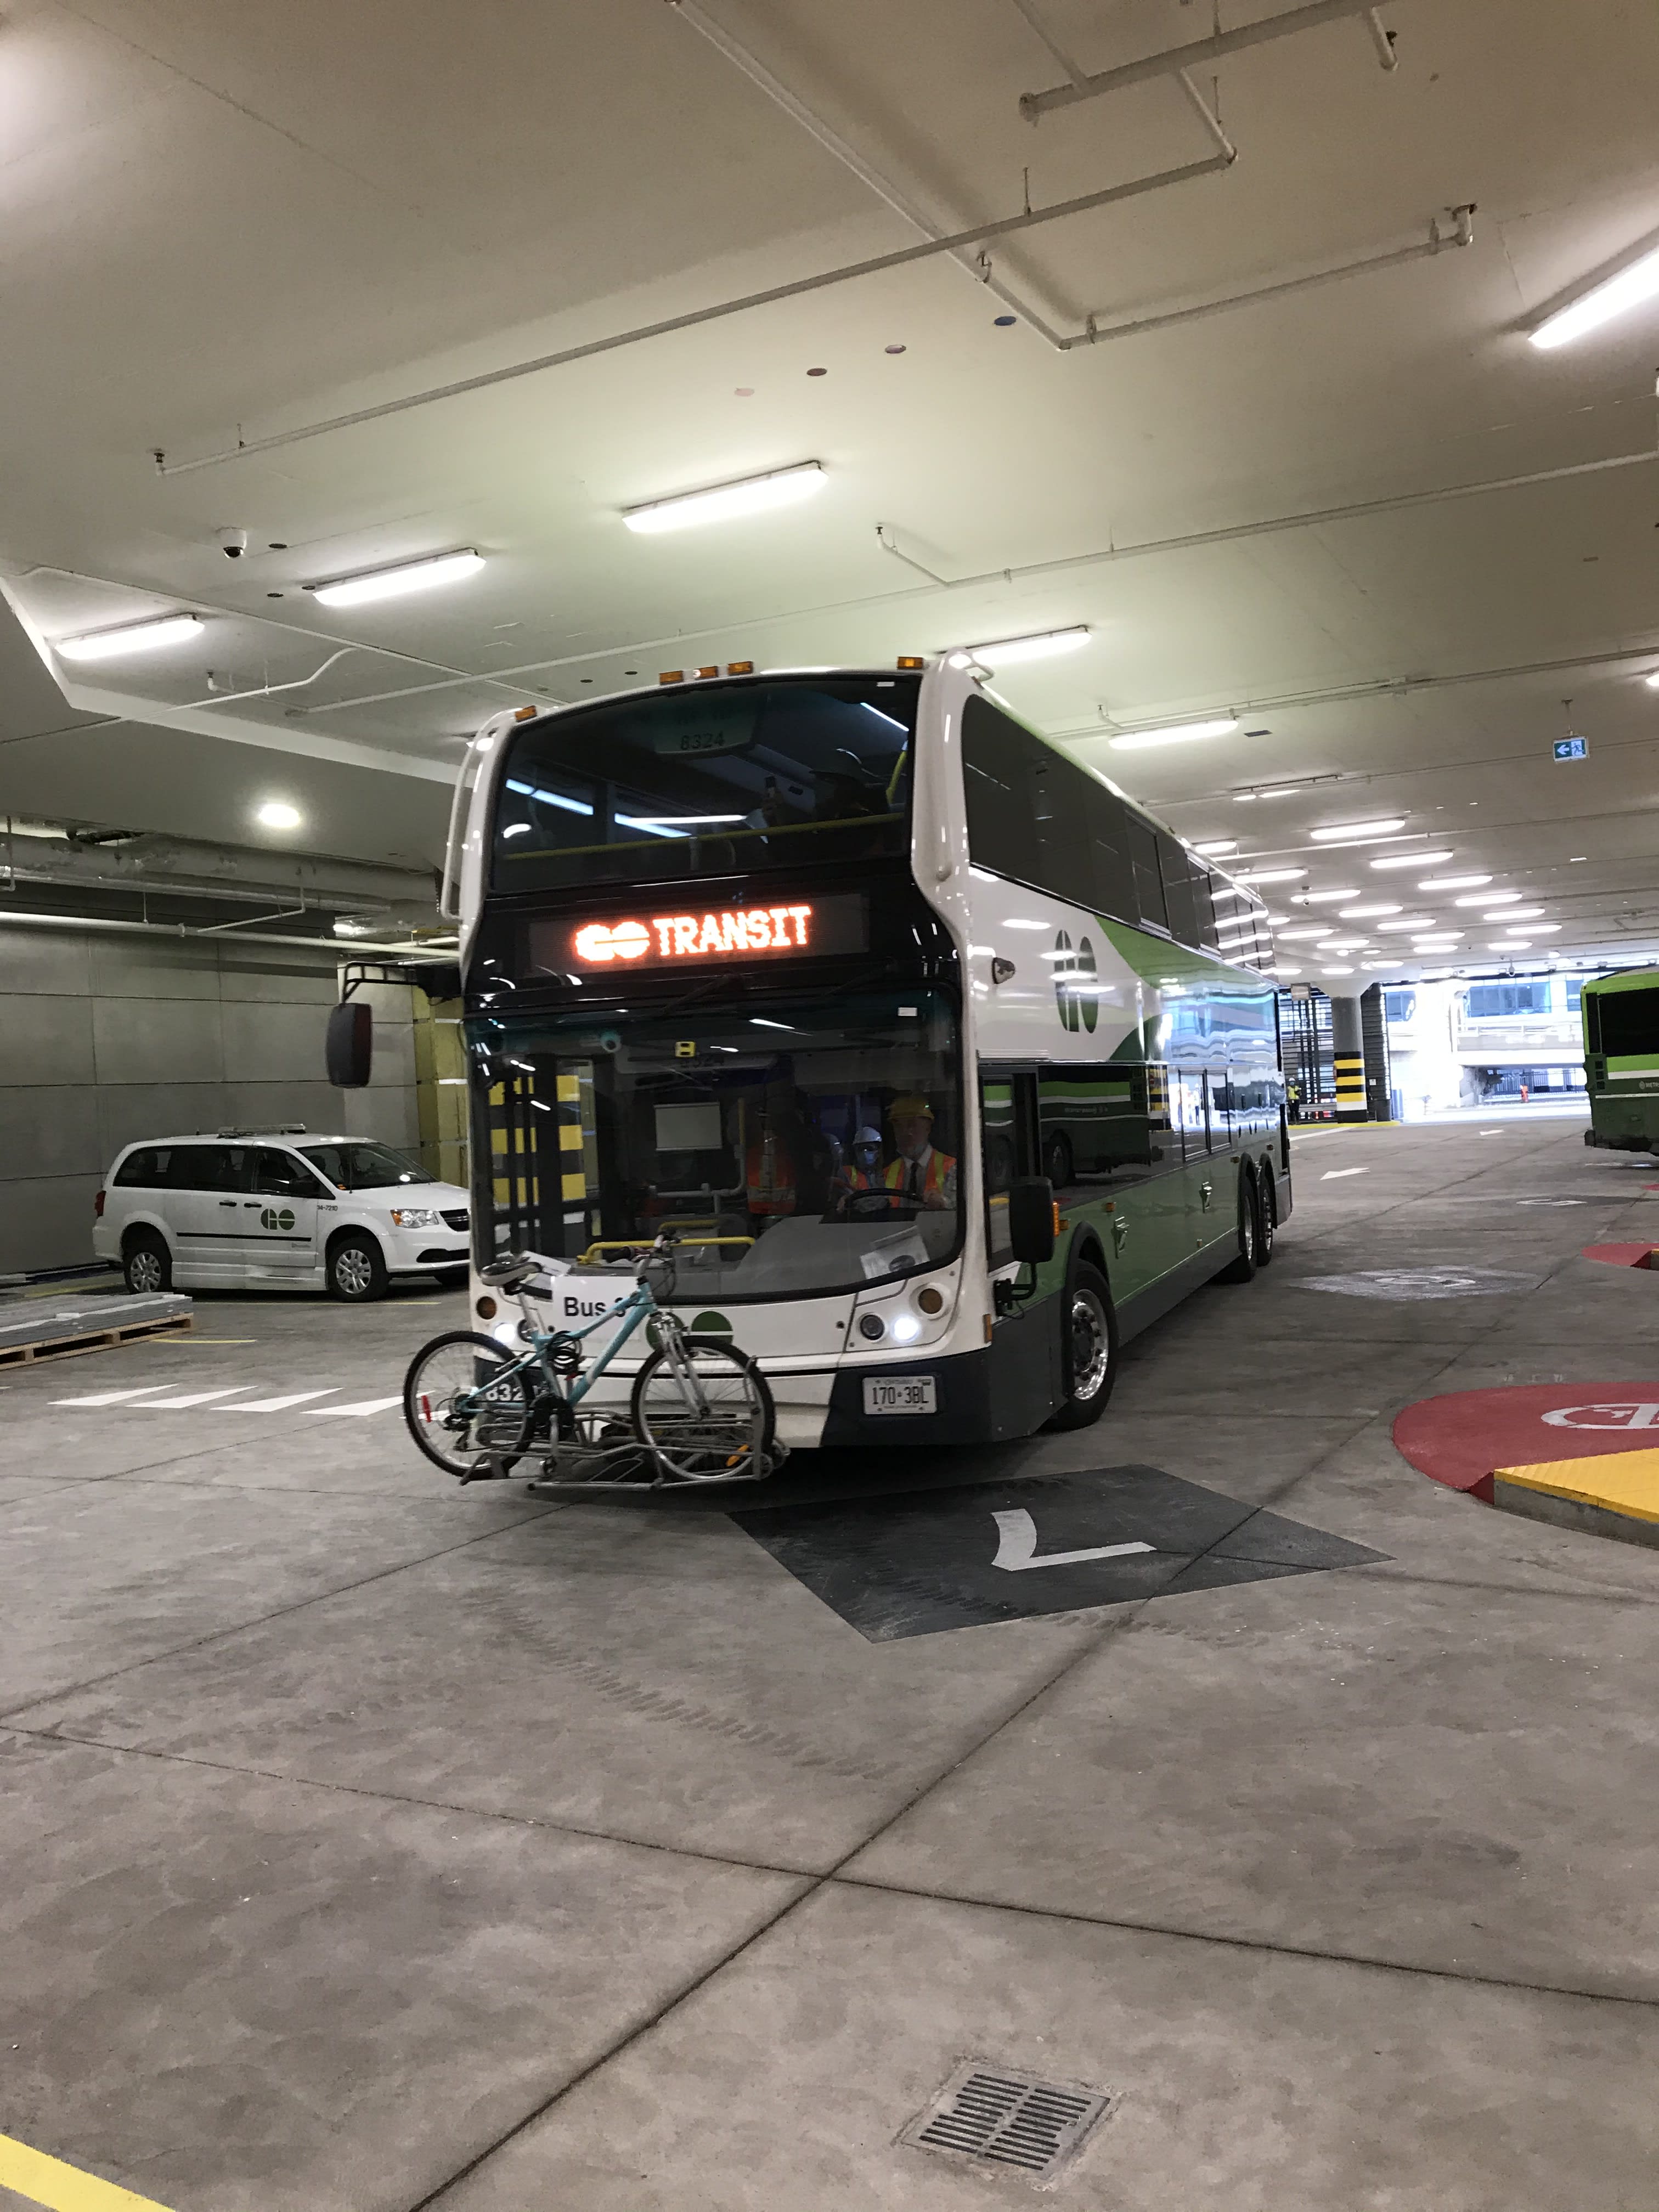 a bus moving through the terminal.